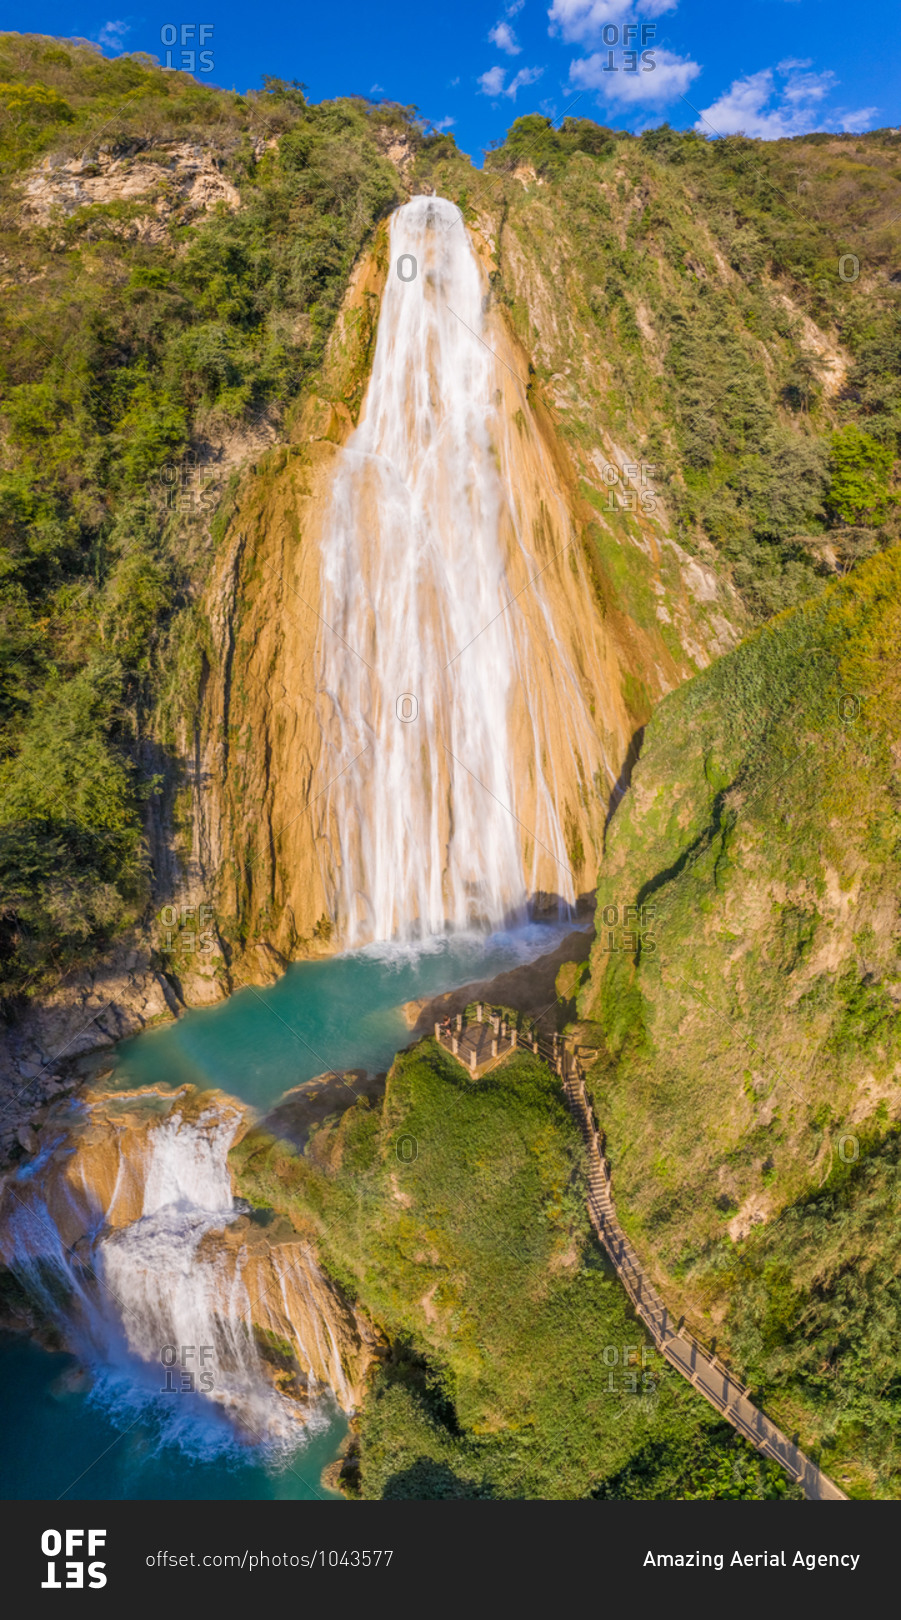 Aerial view of the El Chiflon waterfalls, Mexico.